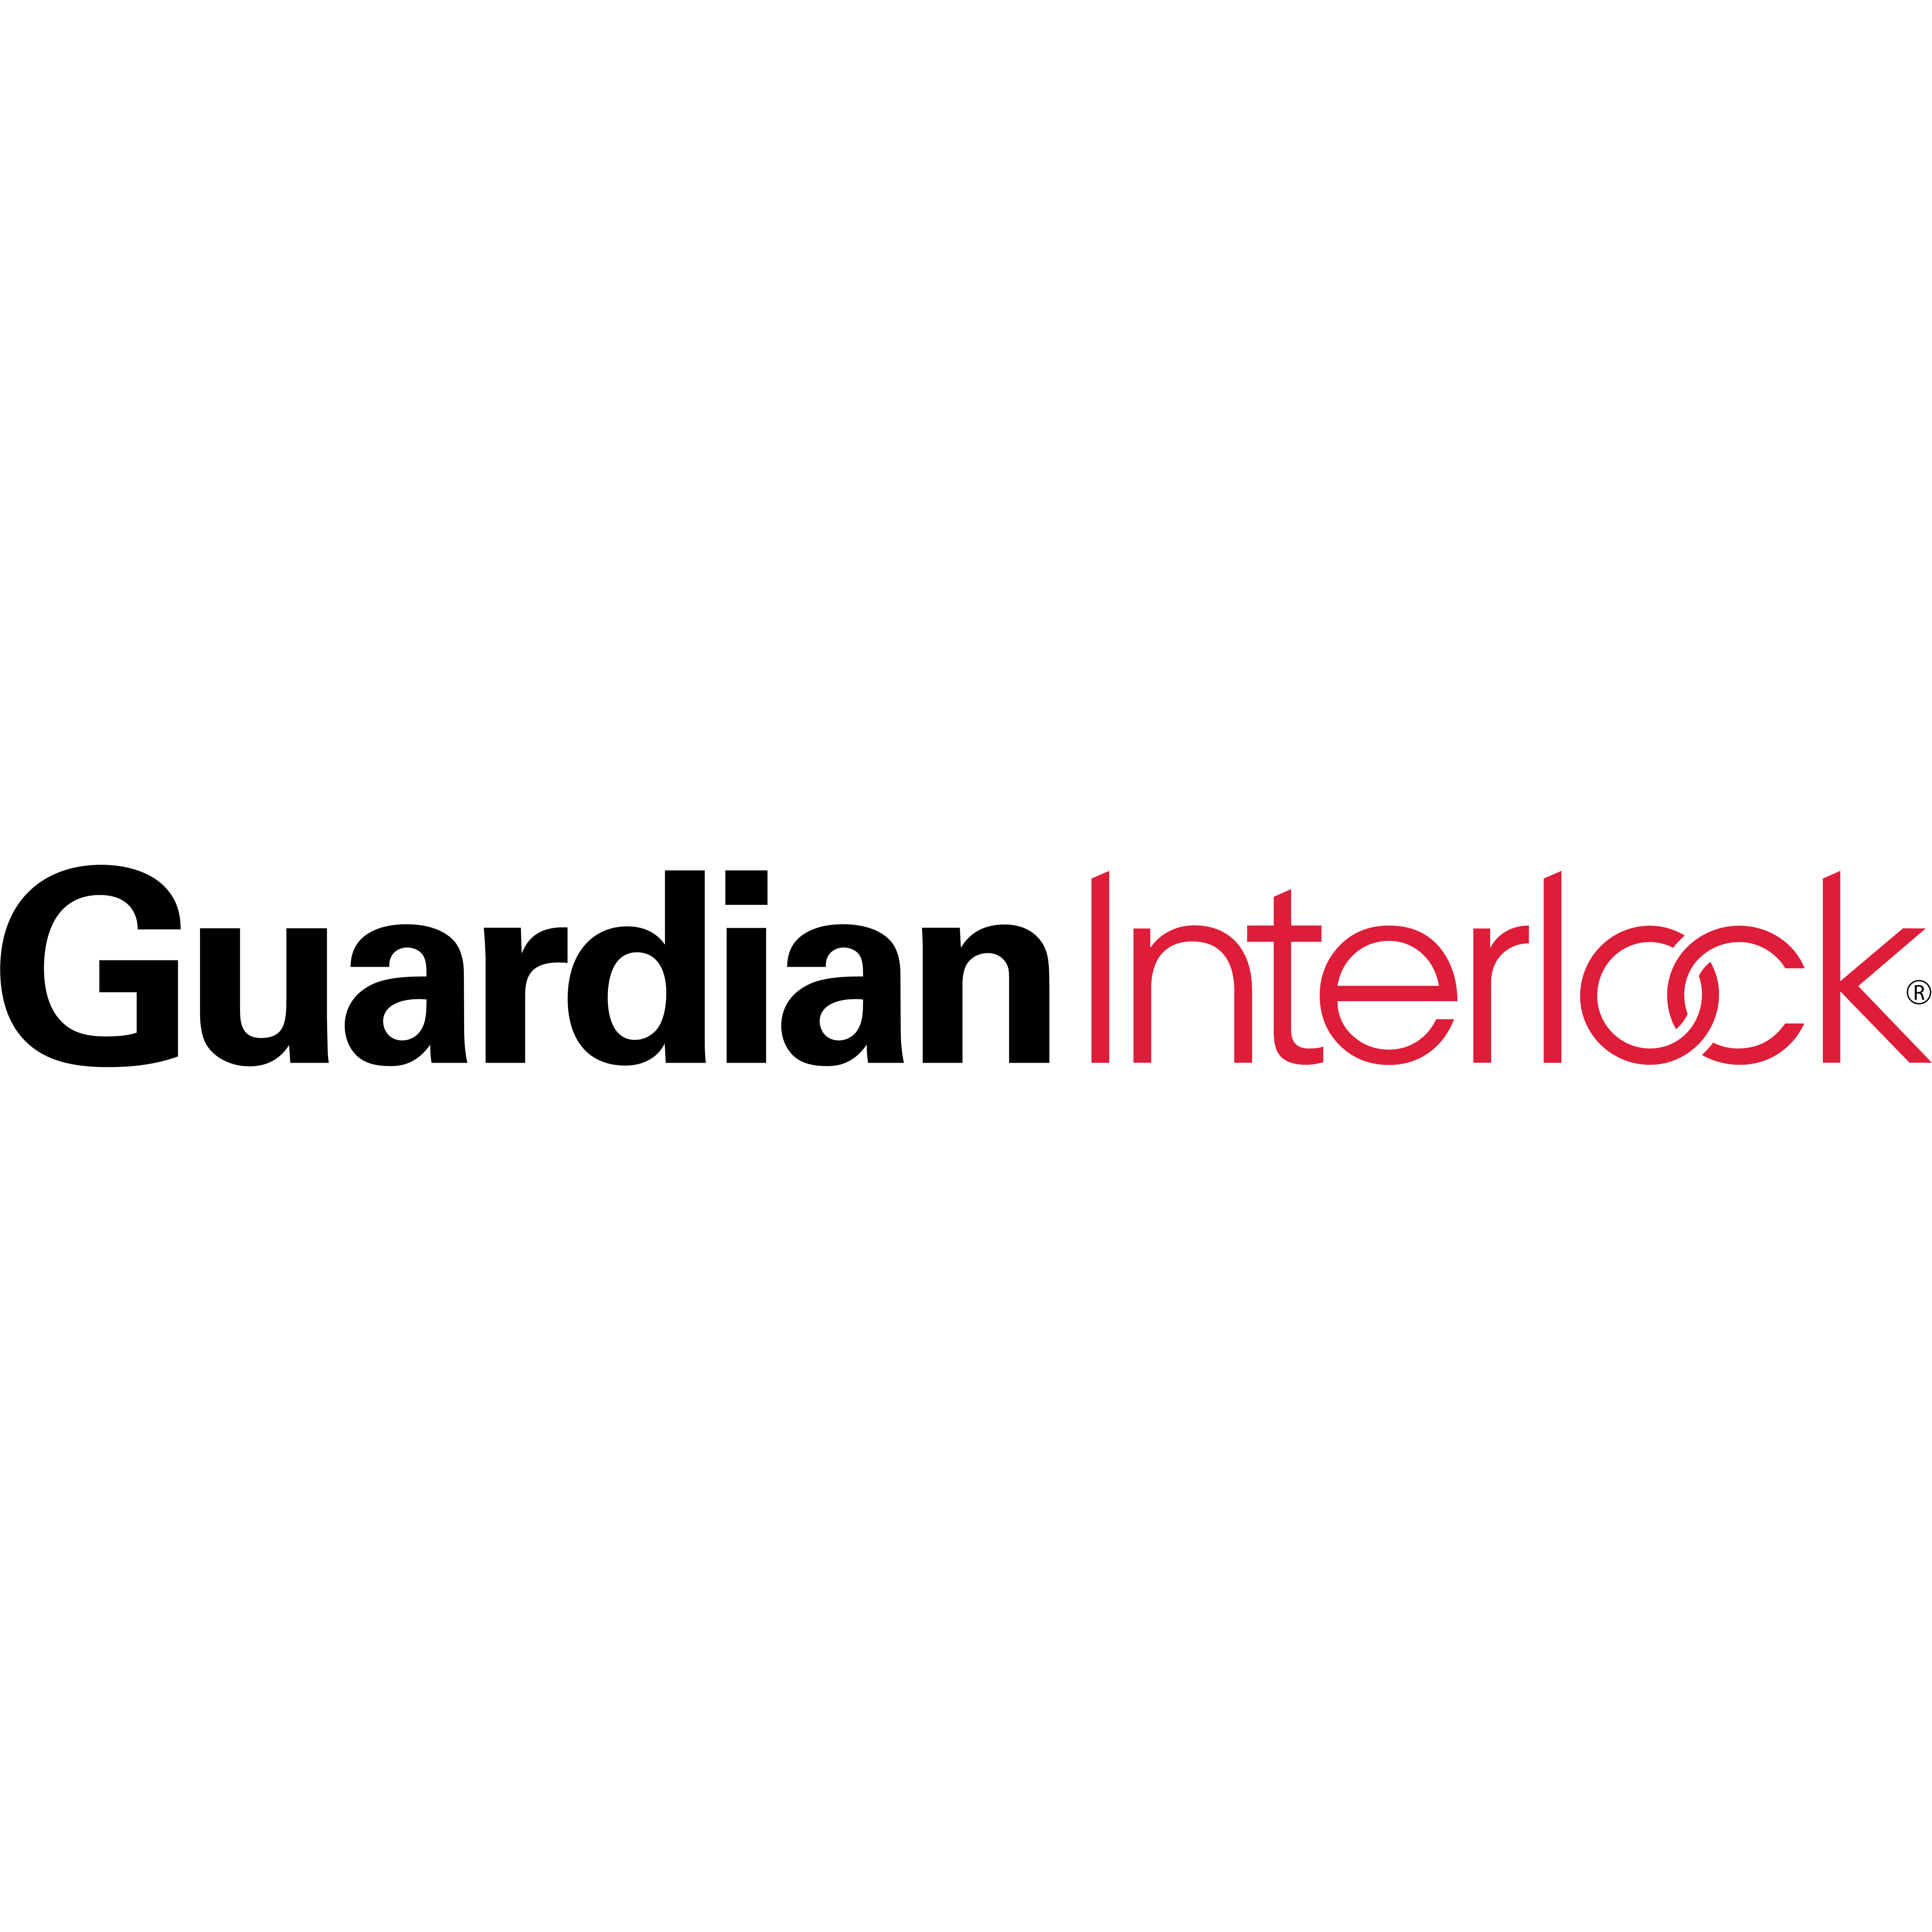 Guardian Interlock - Fremont, NE 68025 - (402)205-5763 | ShowMeLocal.com